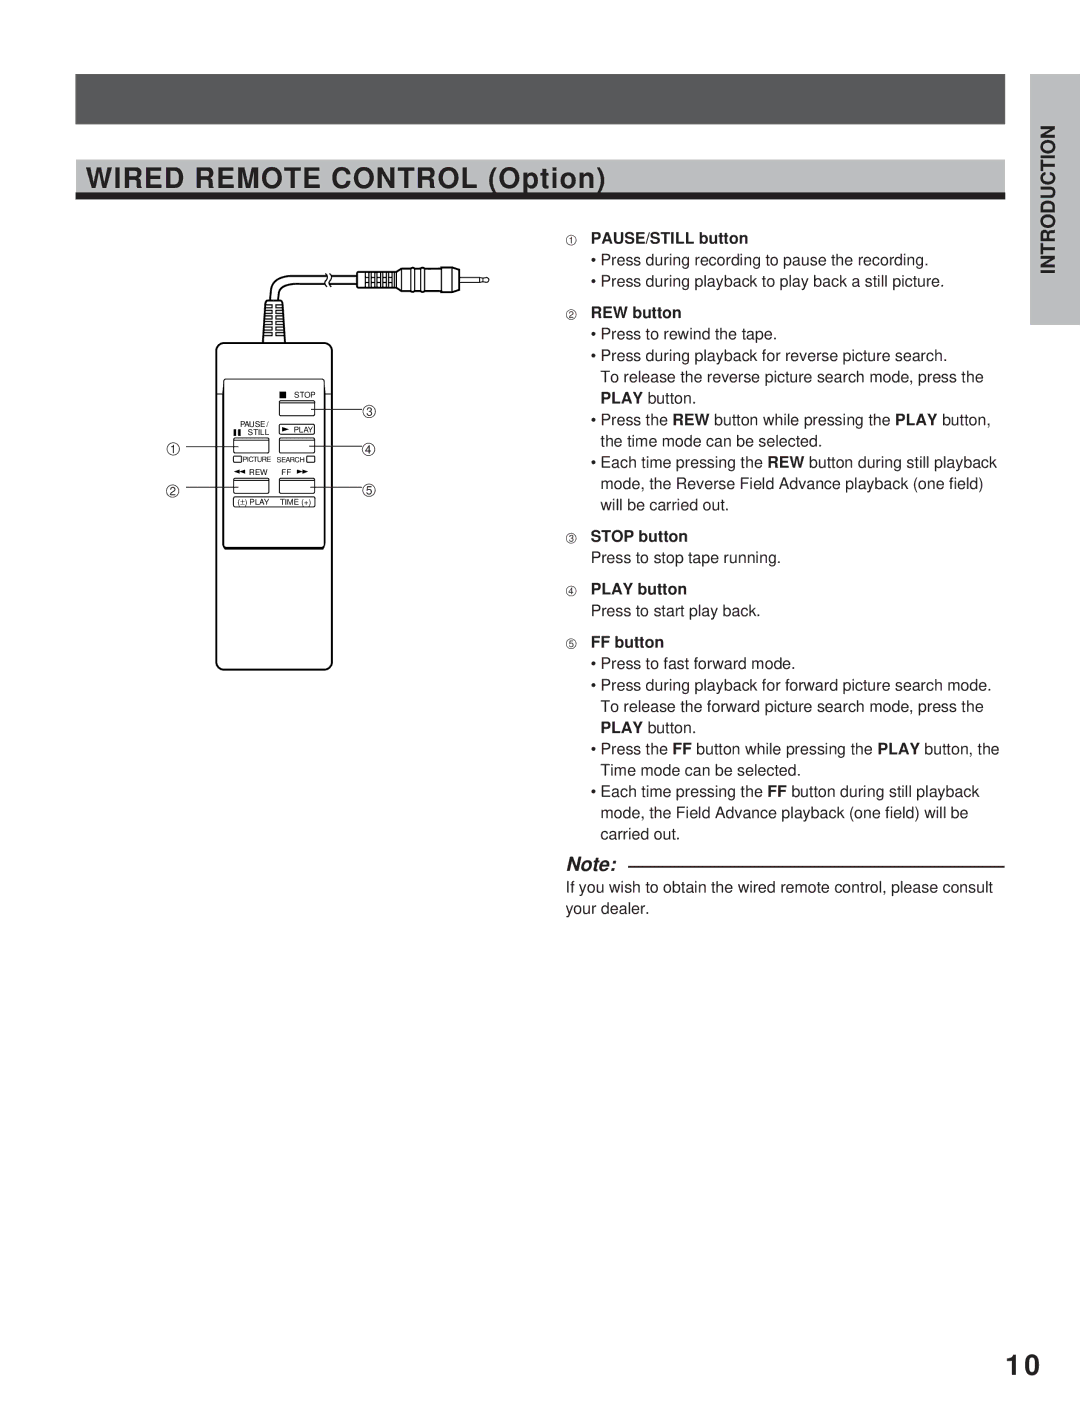 Toshiba kV-9168A instruction manual REW button, Press to start play back, FF button 